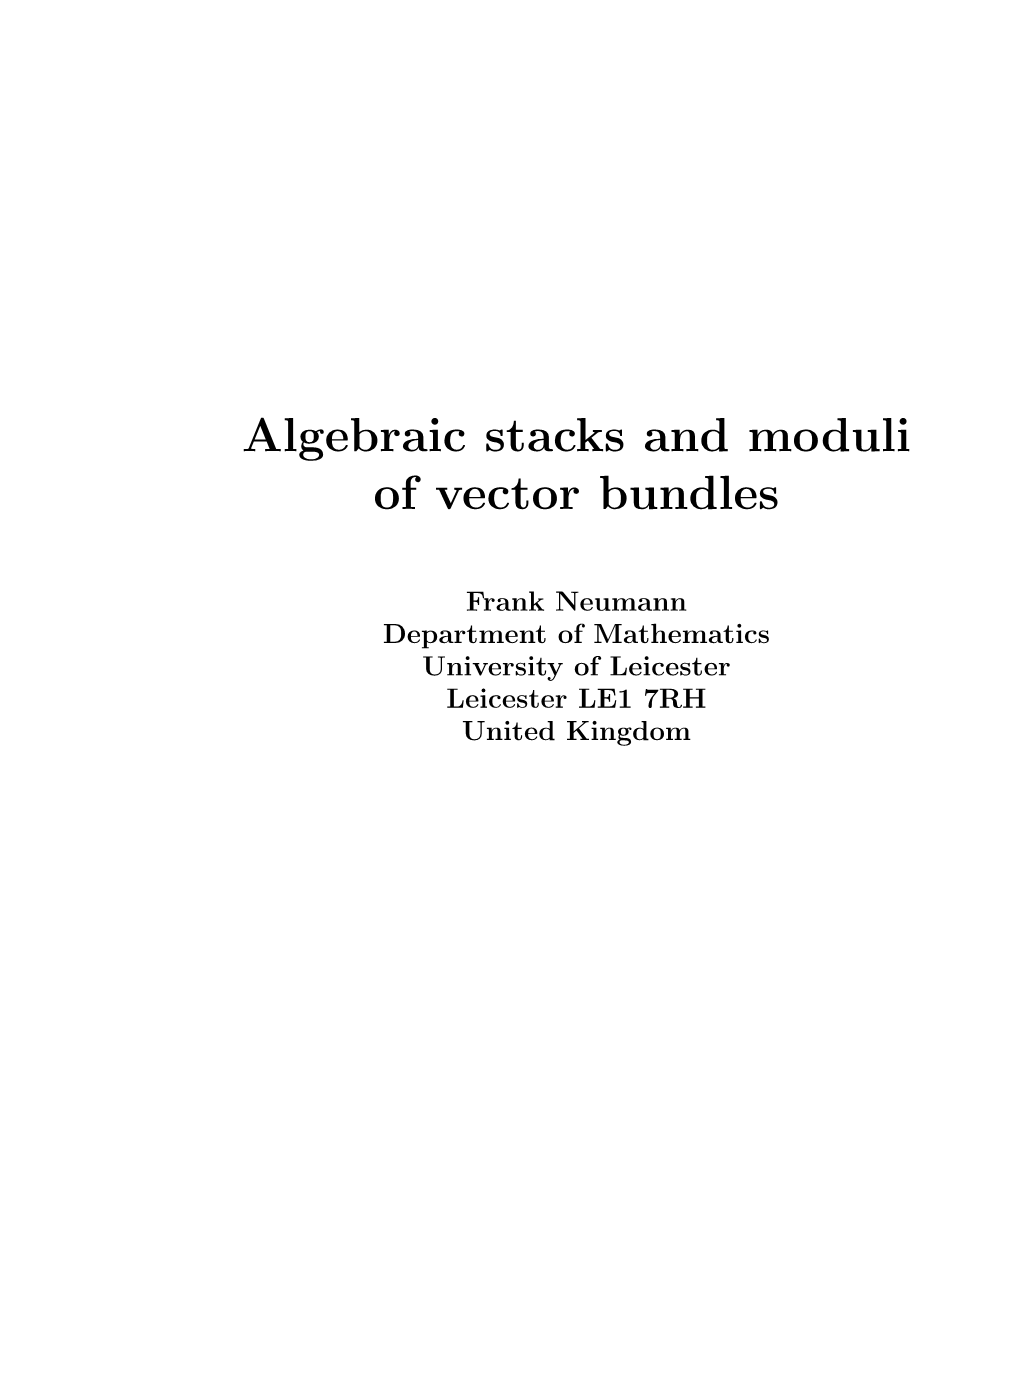 Algebraic Stacks and Moduli of Vector Bundles